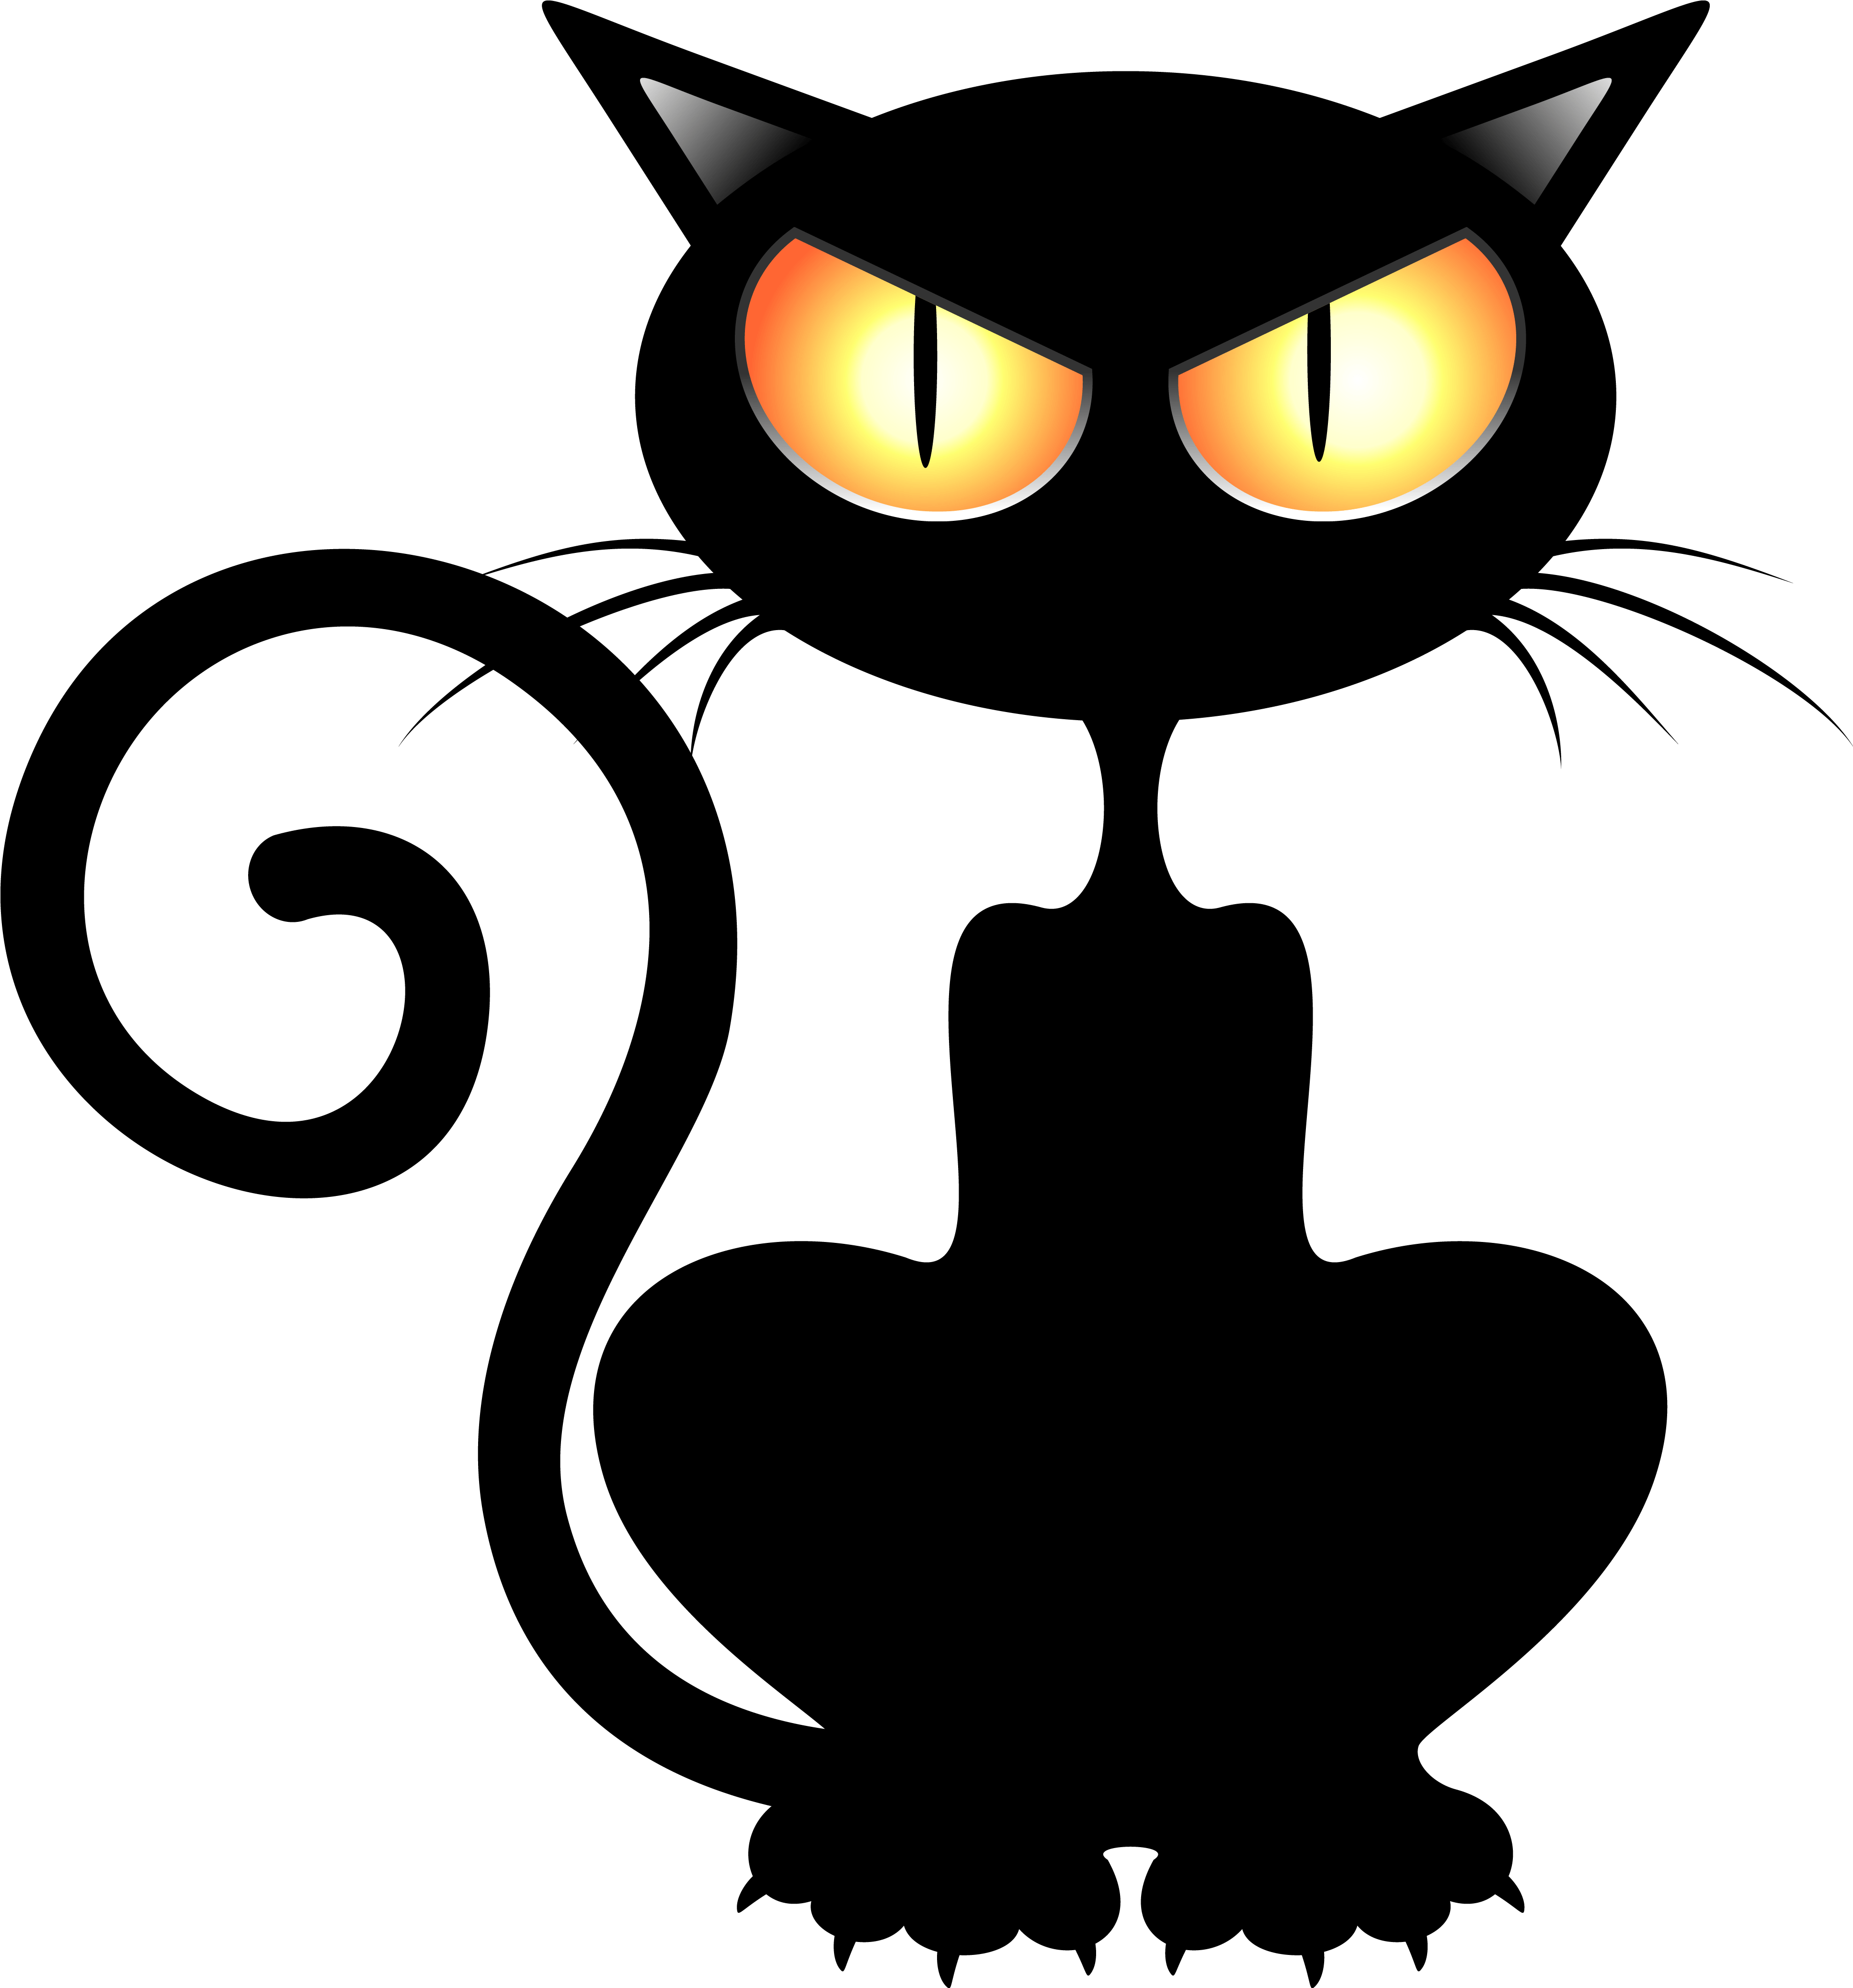 Download Halloween Black Cat Silhouette | Wallpapers.com